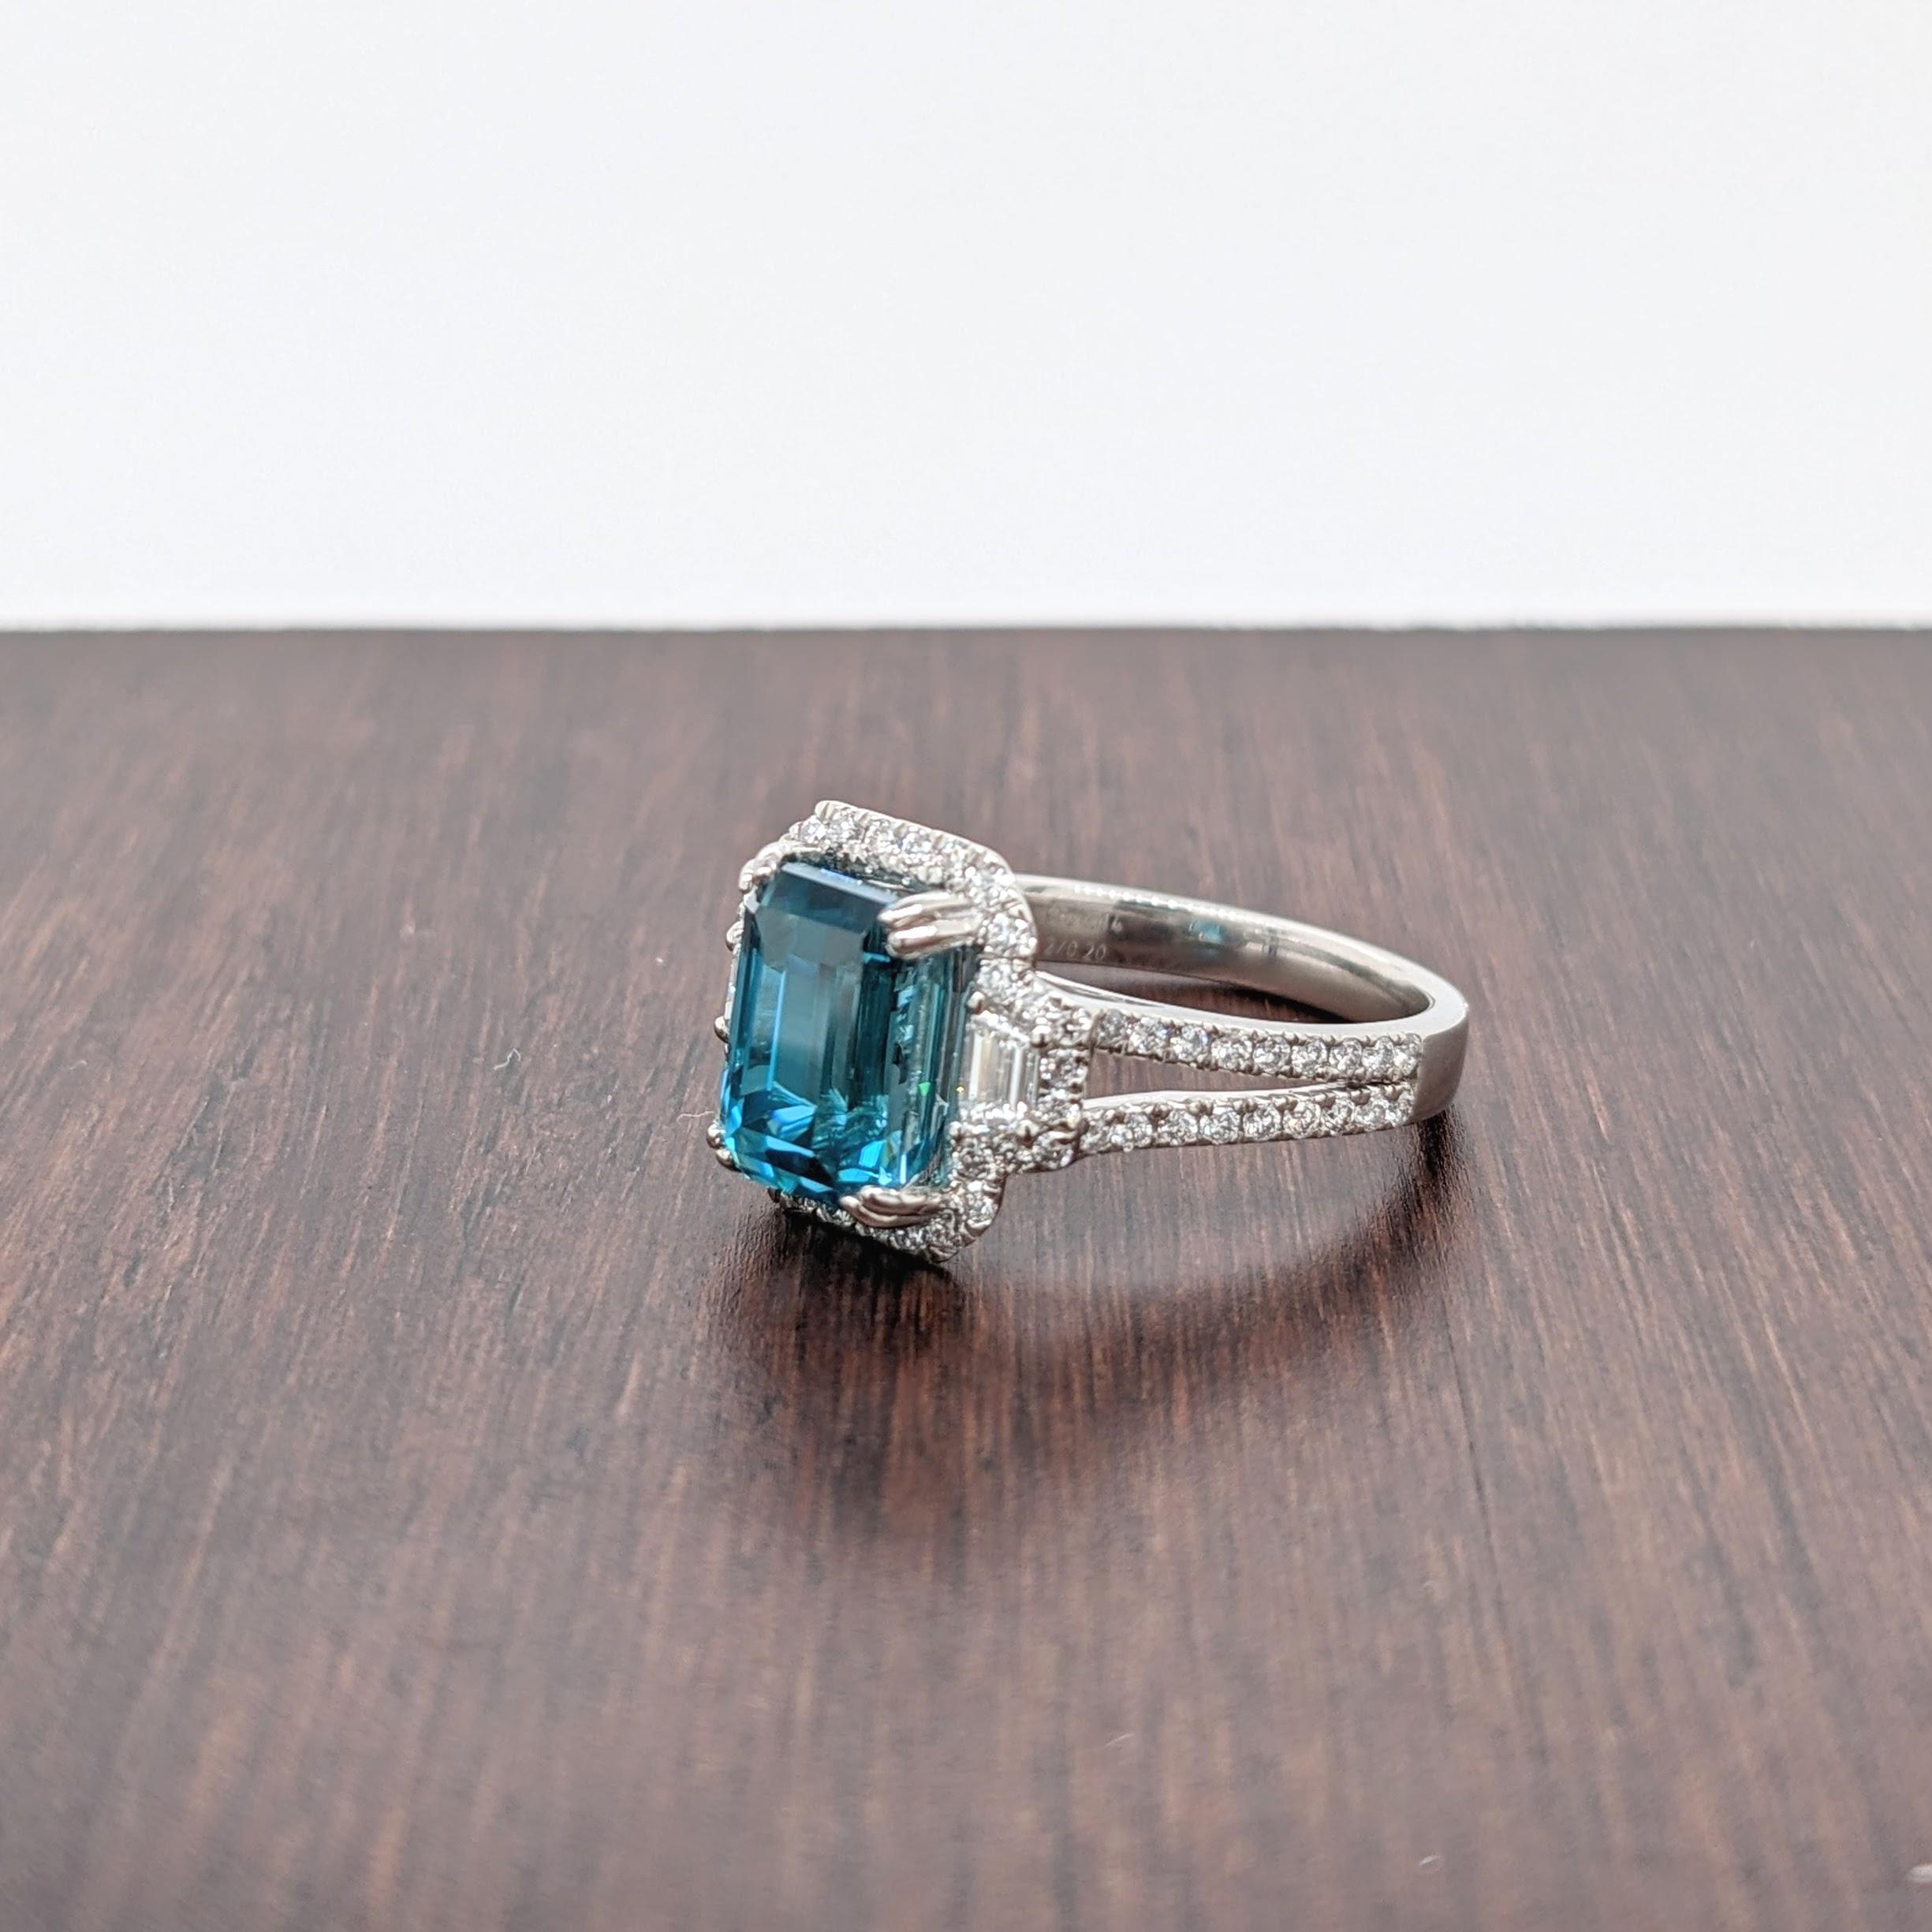 Art Deco 5.3ct Blue Zircon Ring in Platinum w Natural Diamonds Emerald Cut 9x7mm